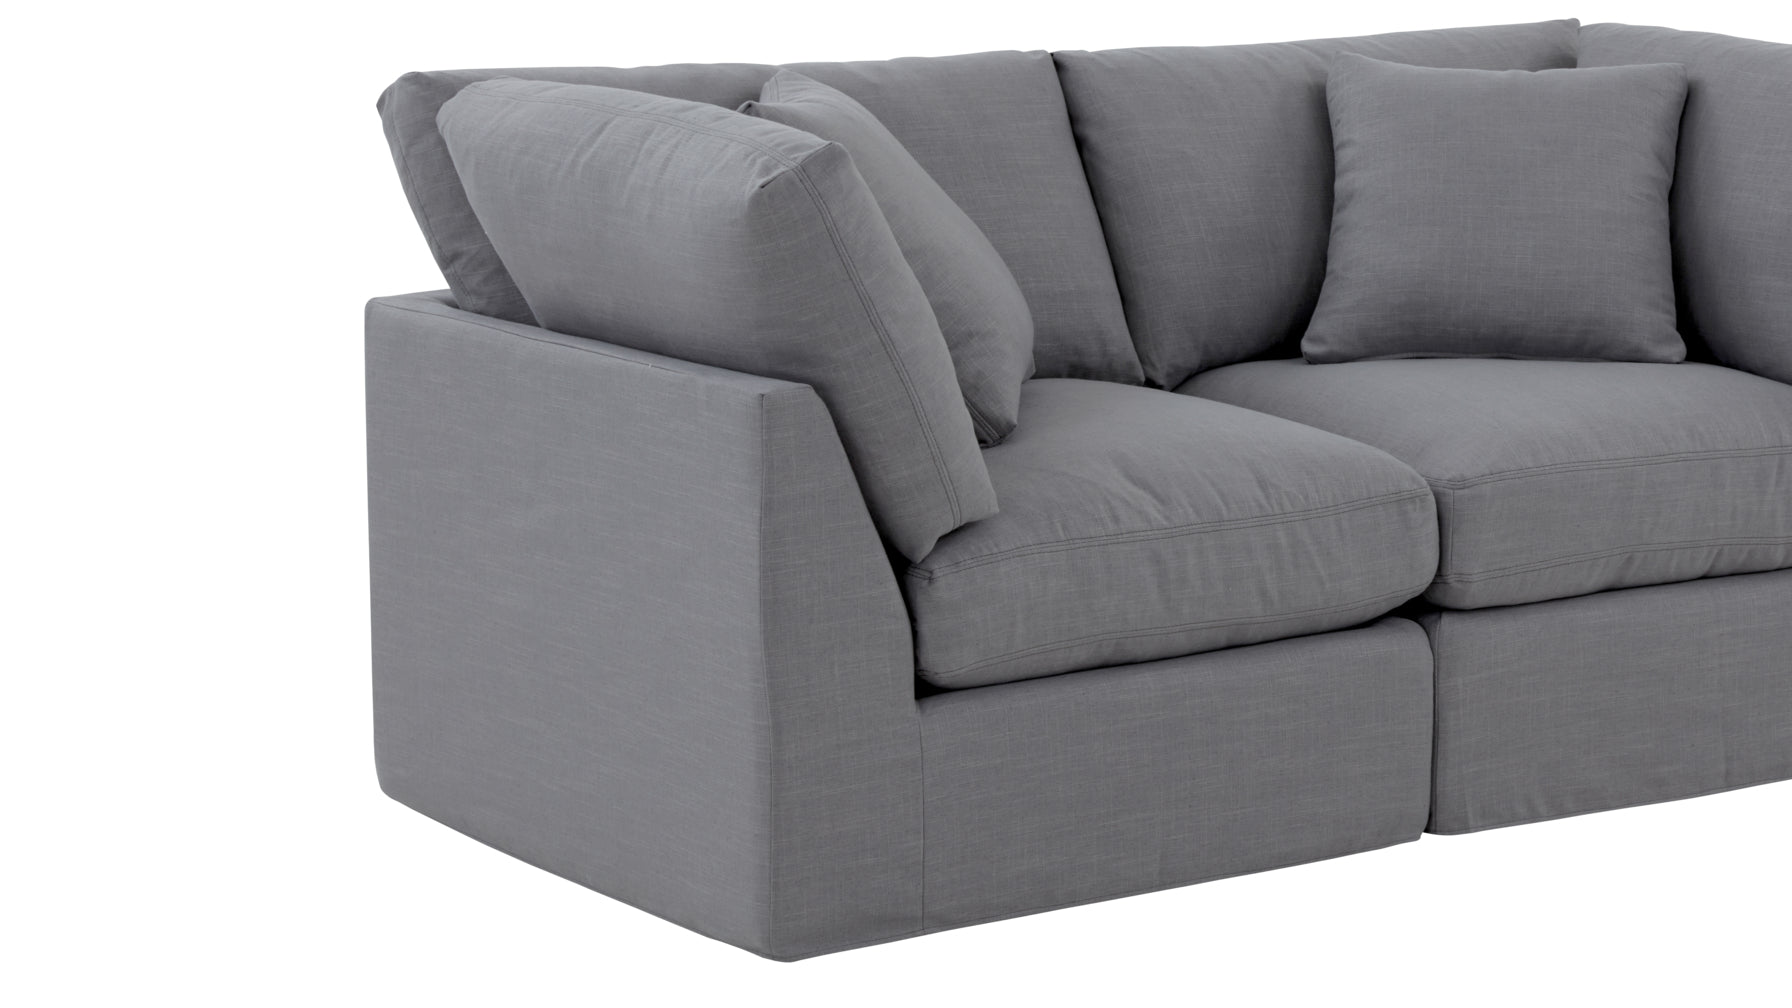 Get Together™ 2-Piece Modular Sofa, Standard, Moonlight - Image 7